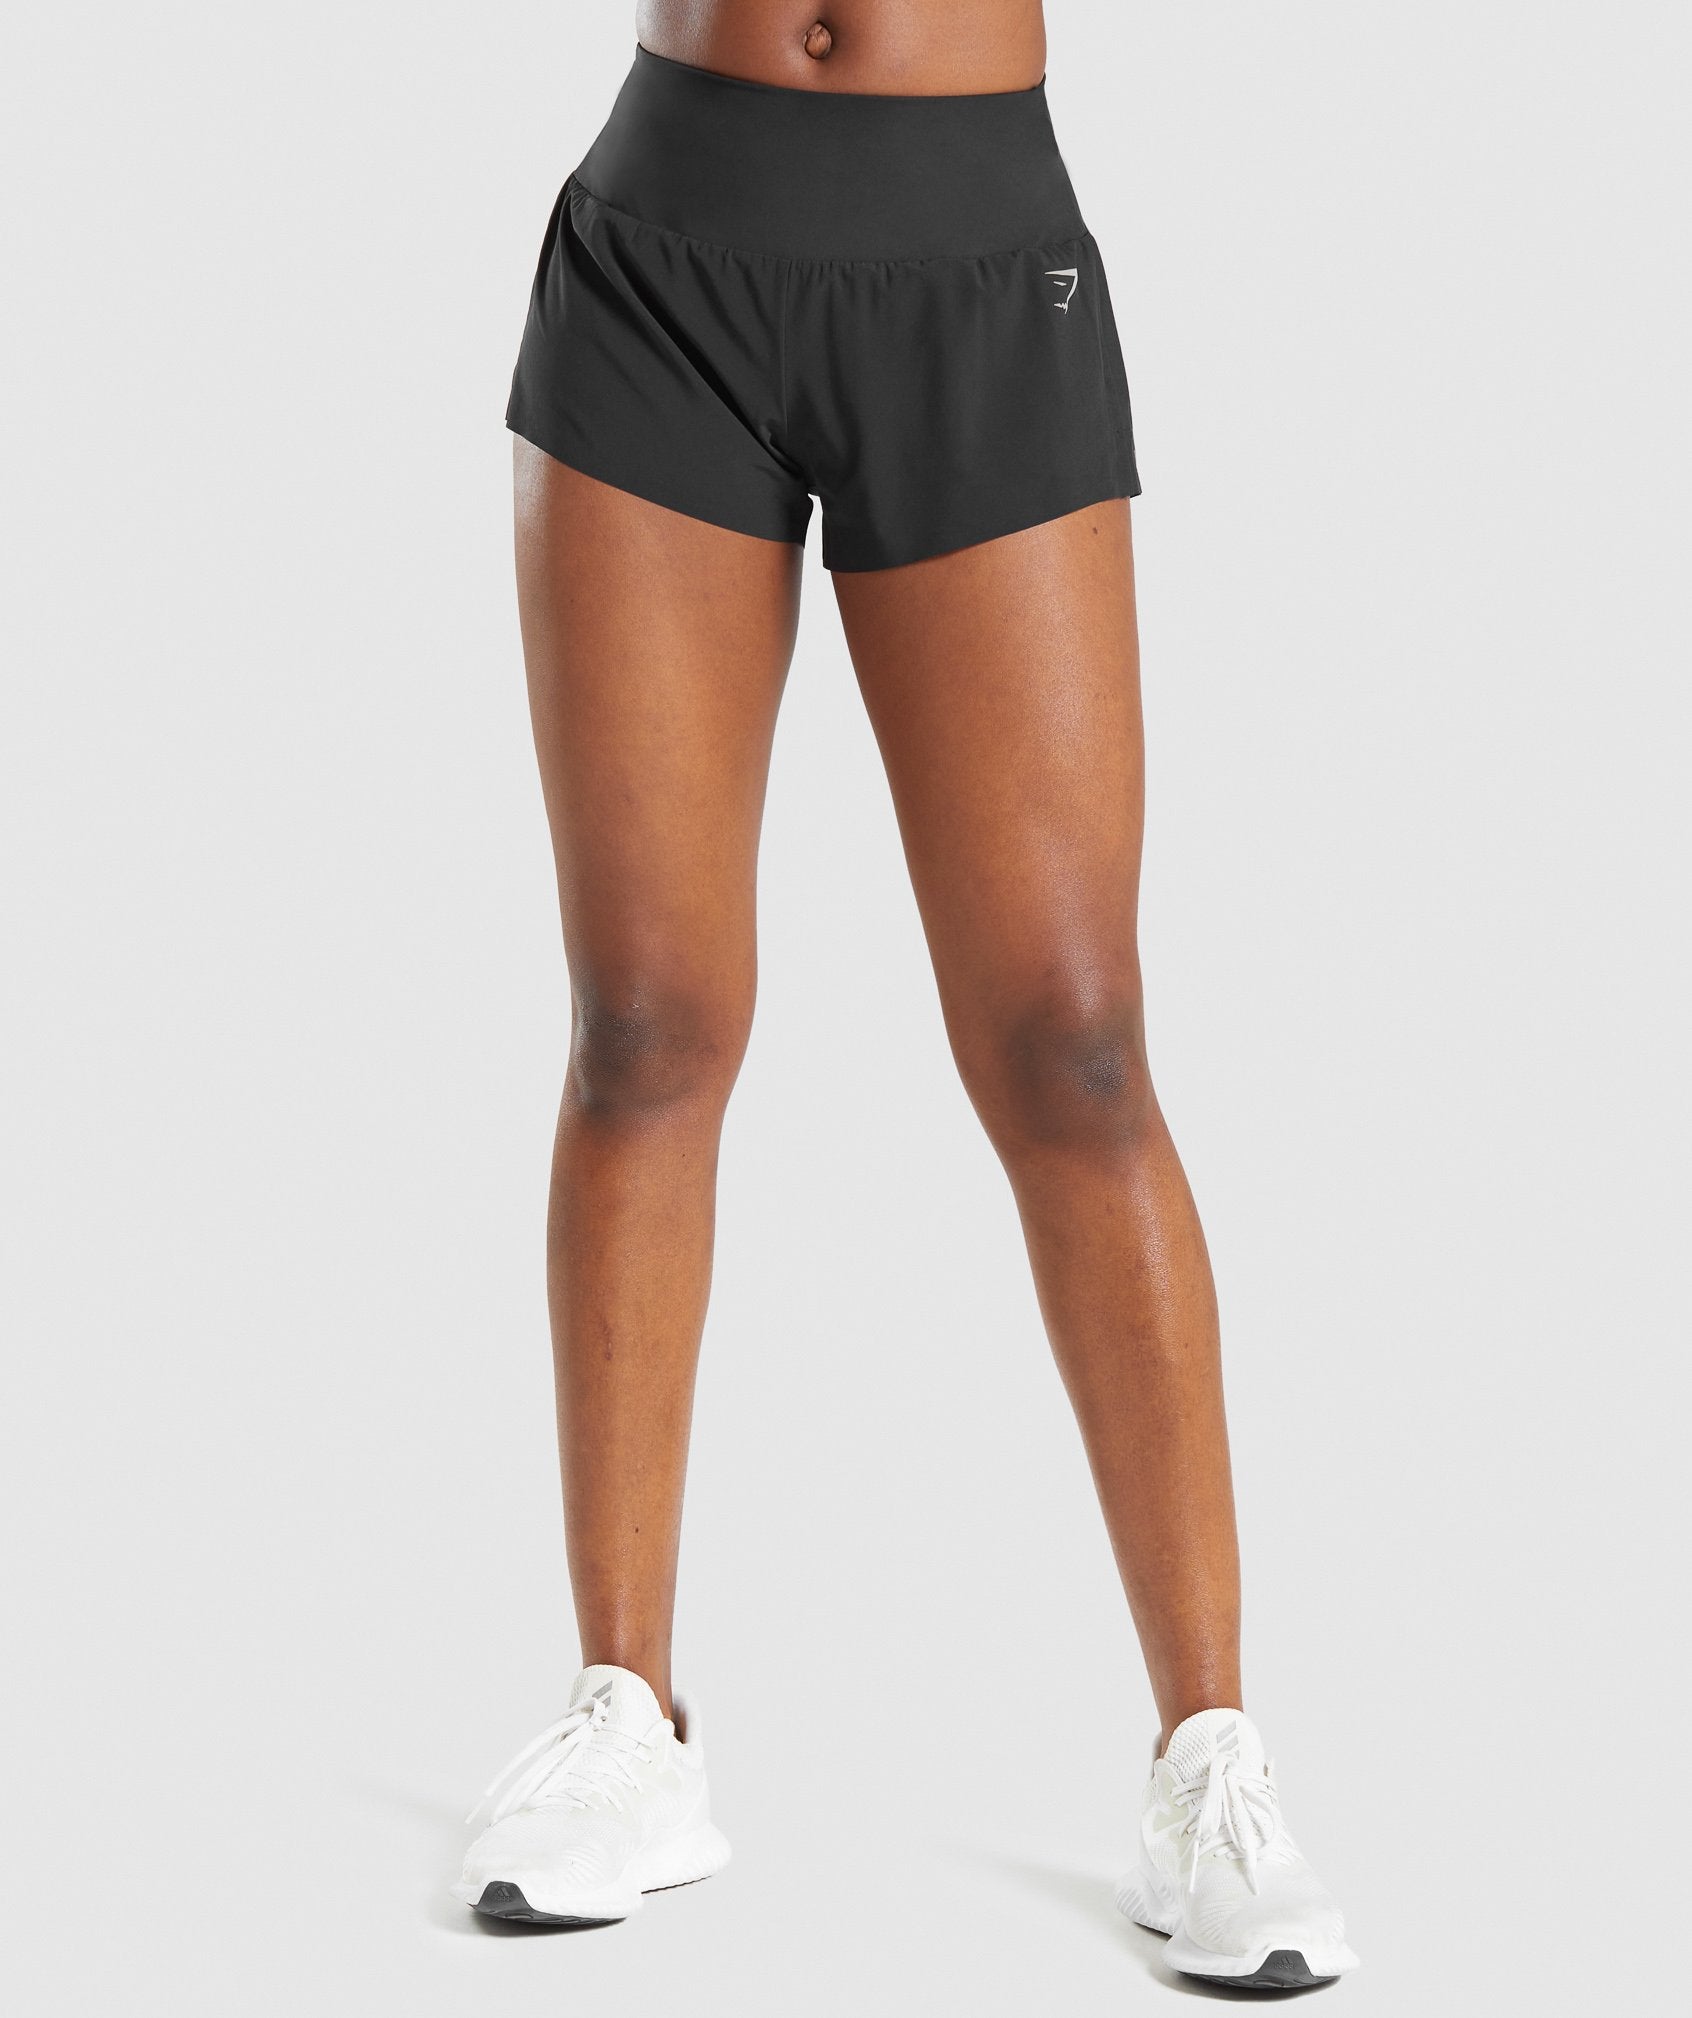 Gymshark Speed Shorts - Black